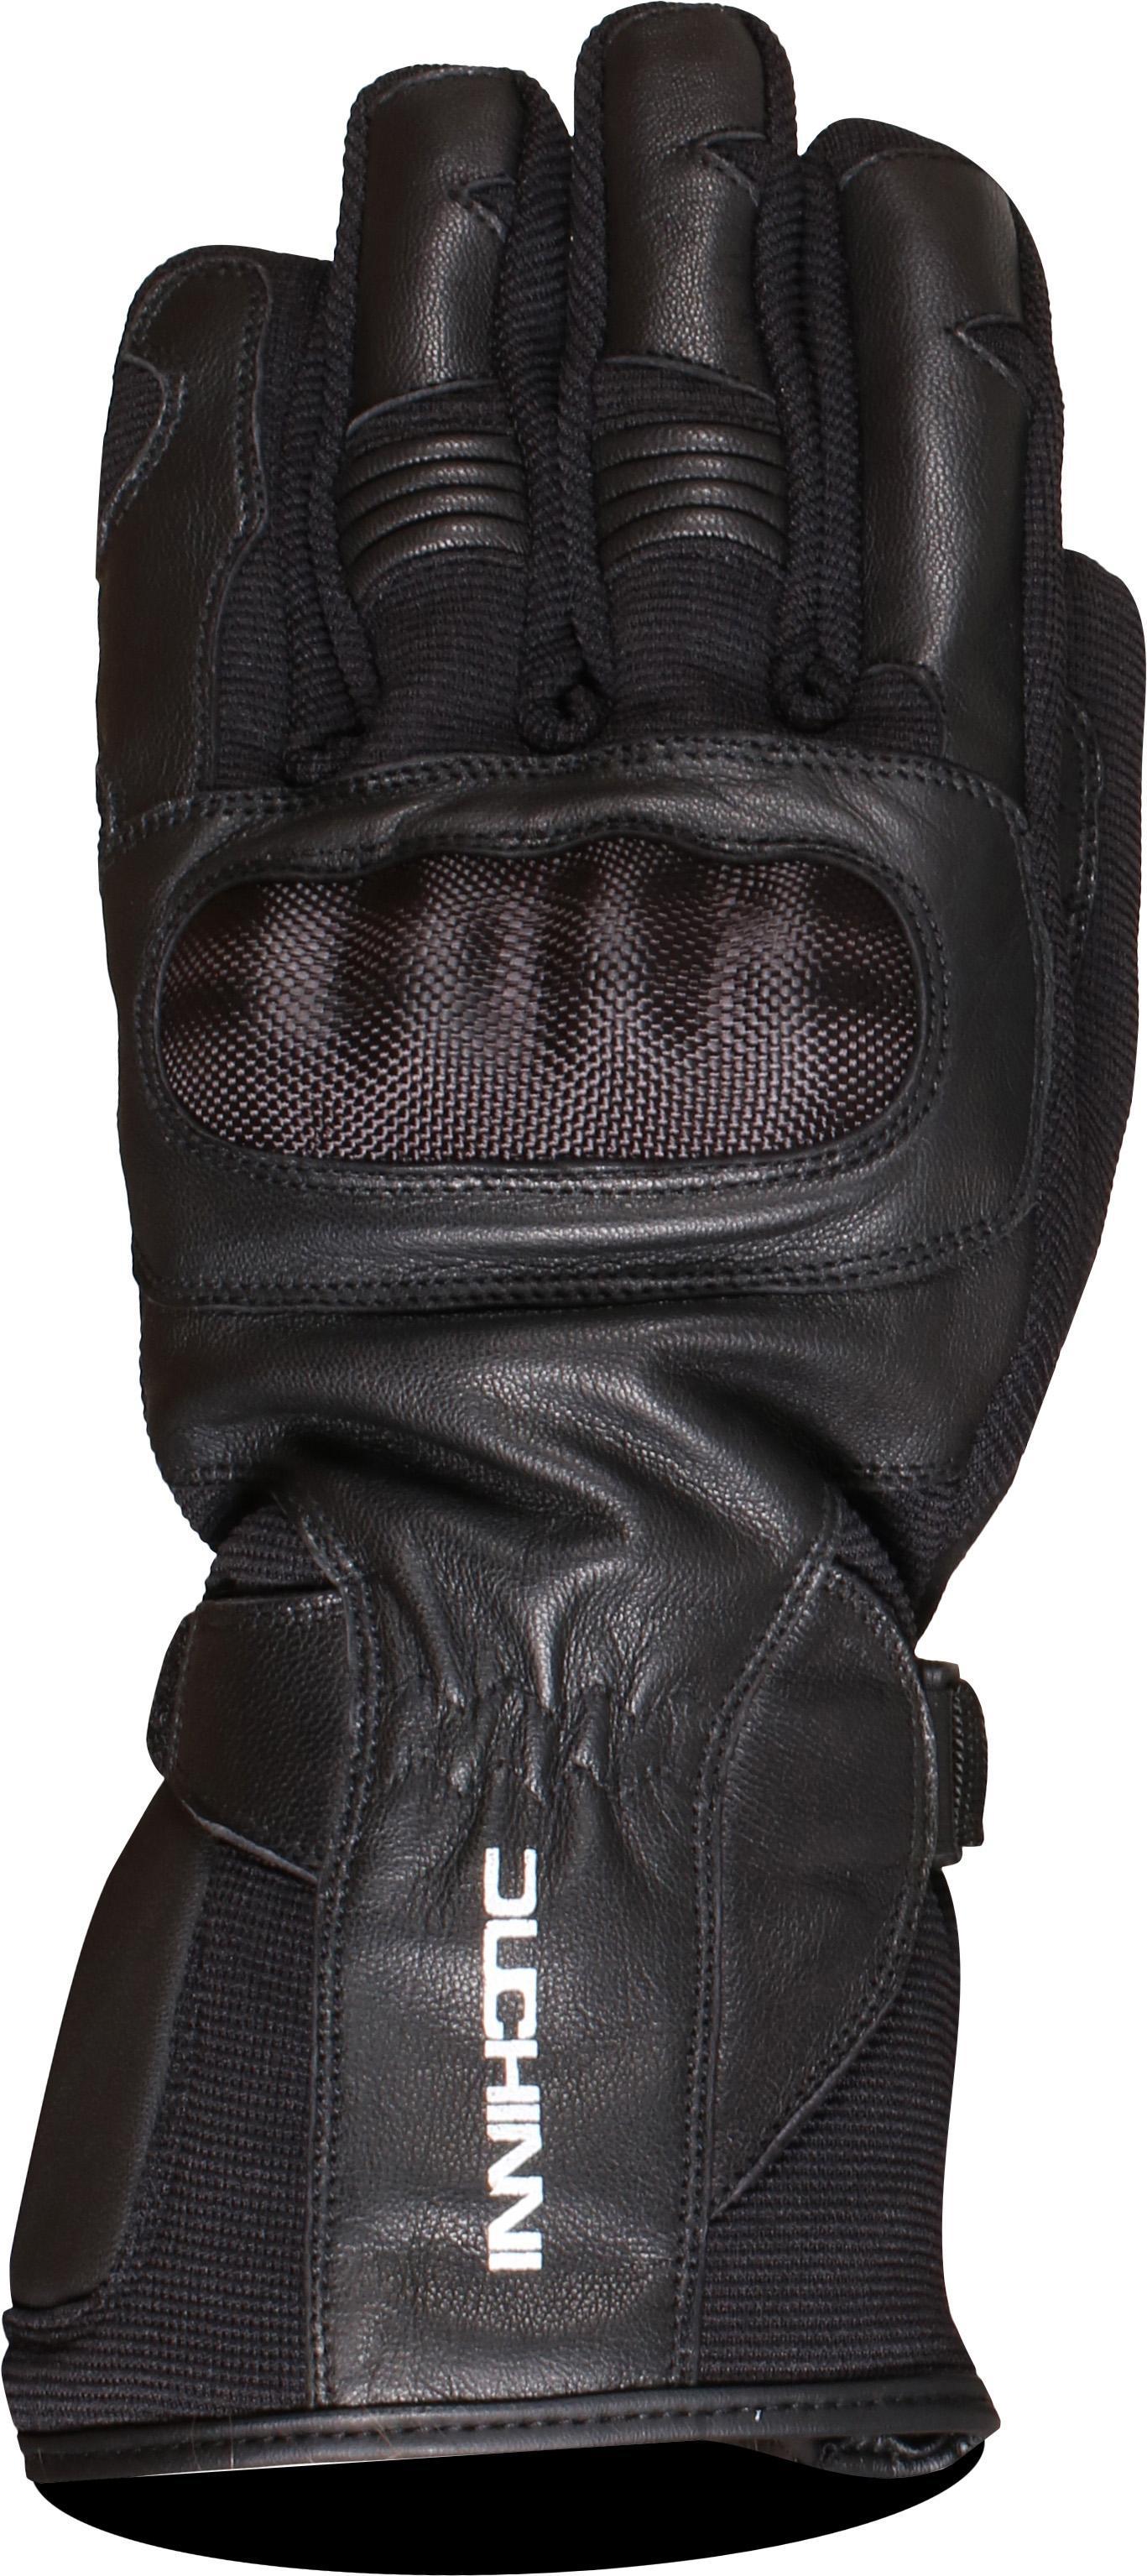 Duchinni Shadow Motorcycle Gloves - Black, Xl